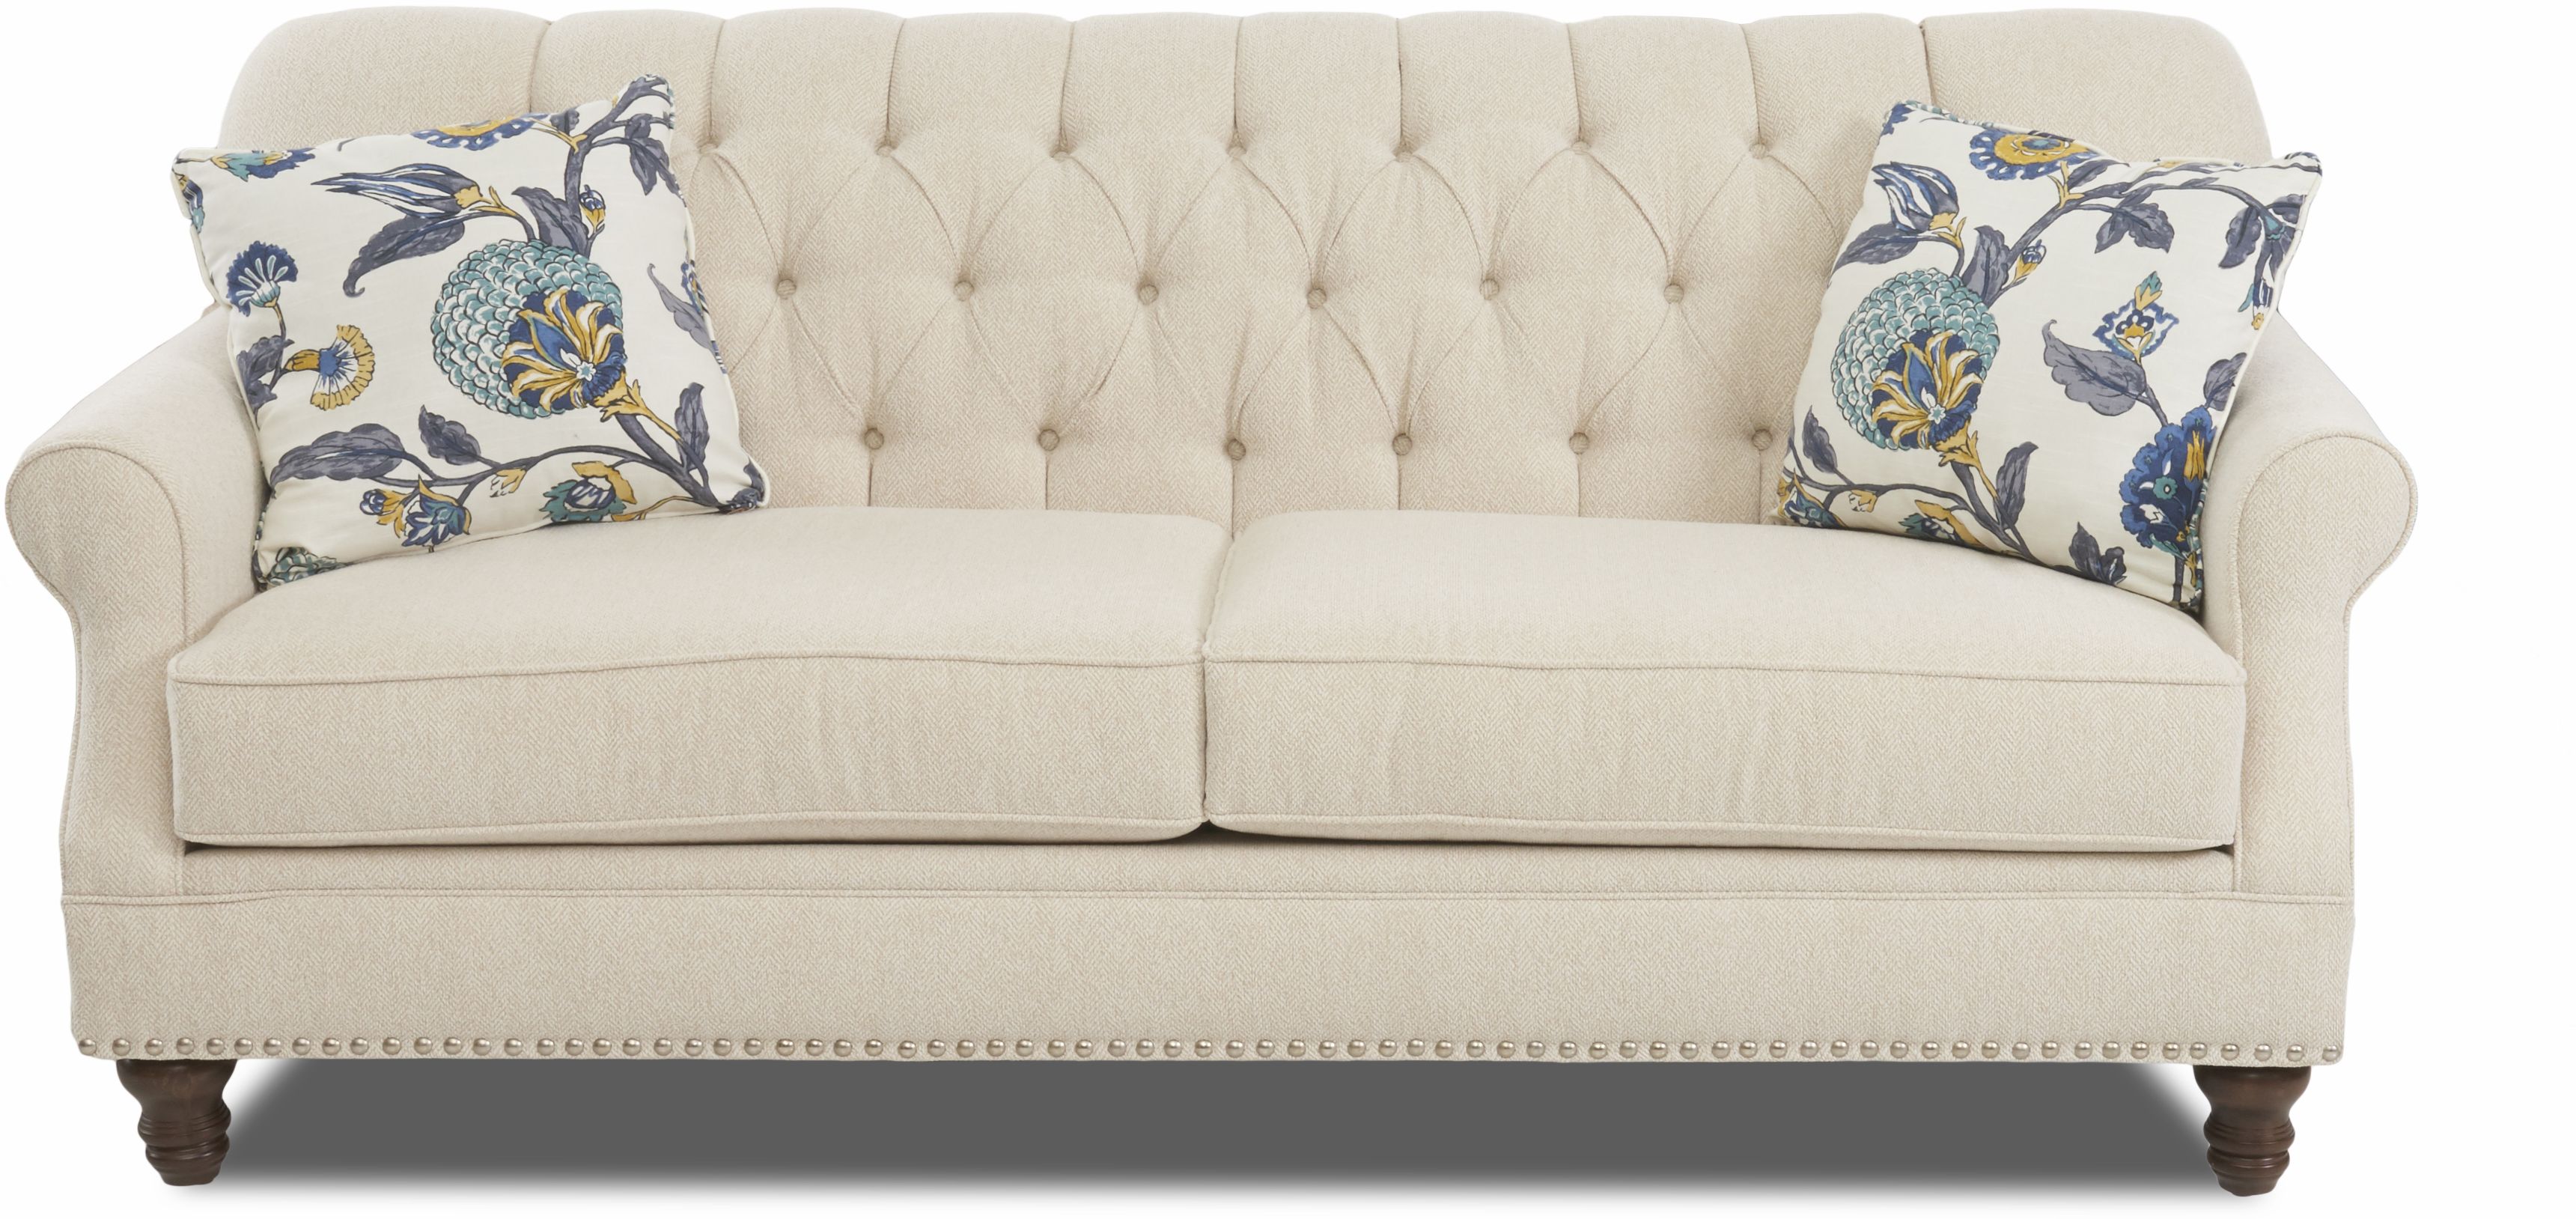 Klaussner® Trisha Yearwood Coming Home Burbank Sofa